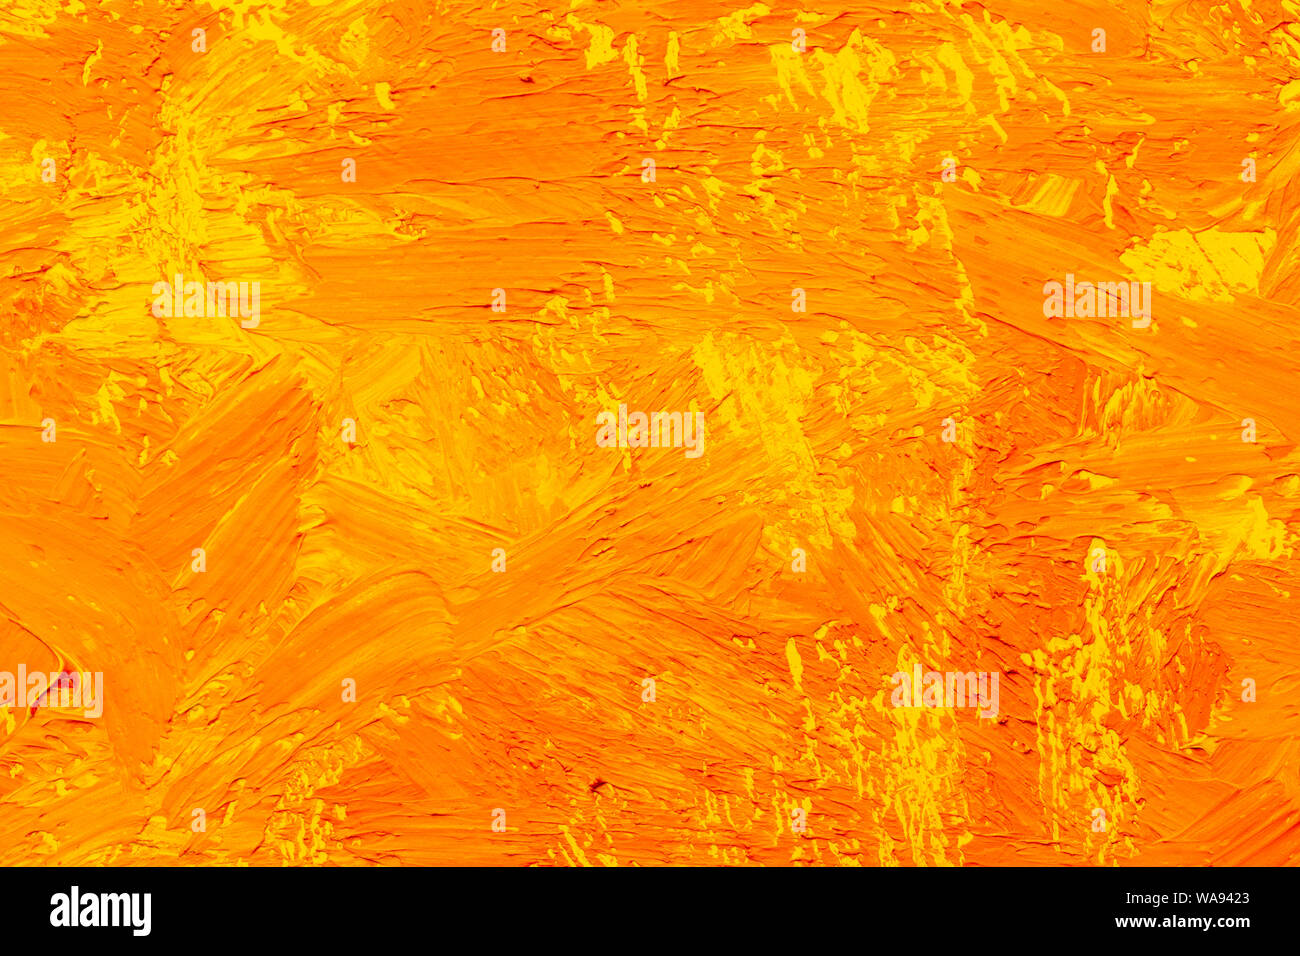 Abstract orange yellow real oil painting impasto brush strokes full frame Stock Photo